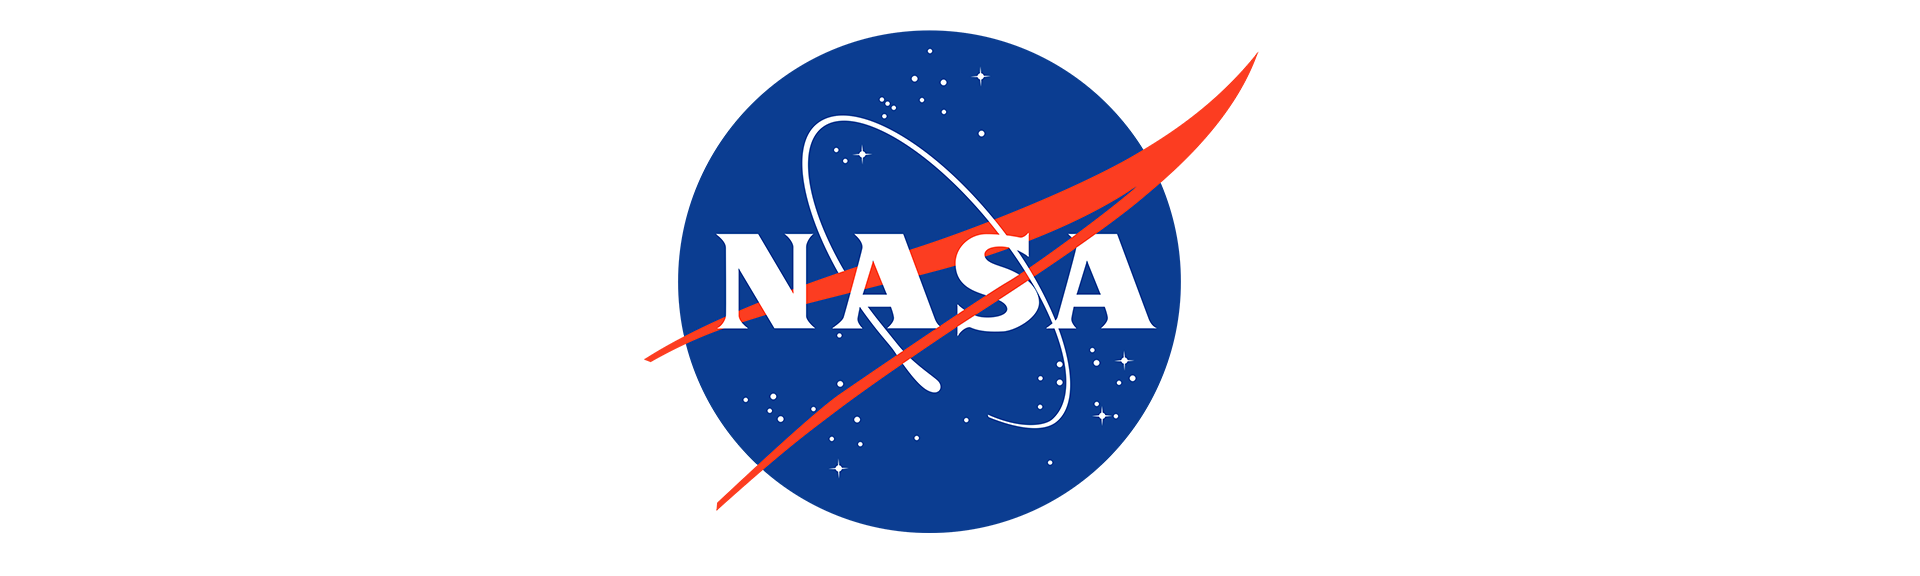 NASA_logo.svg